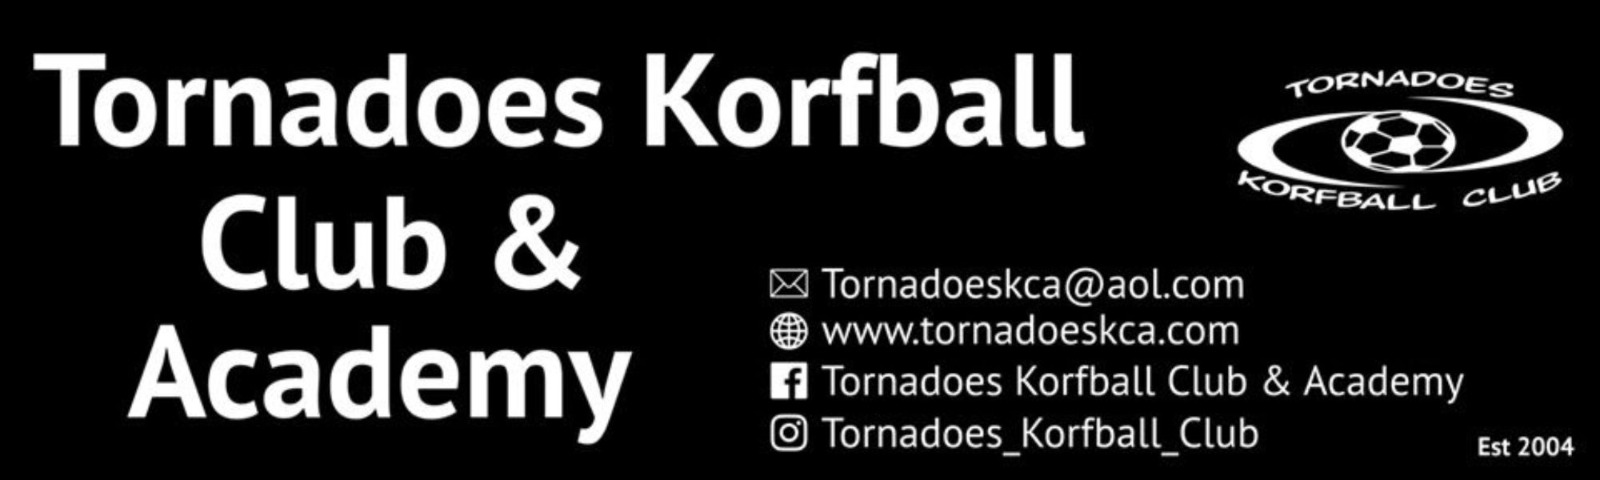 Tornadoes Korfball Club & Academy community image